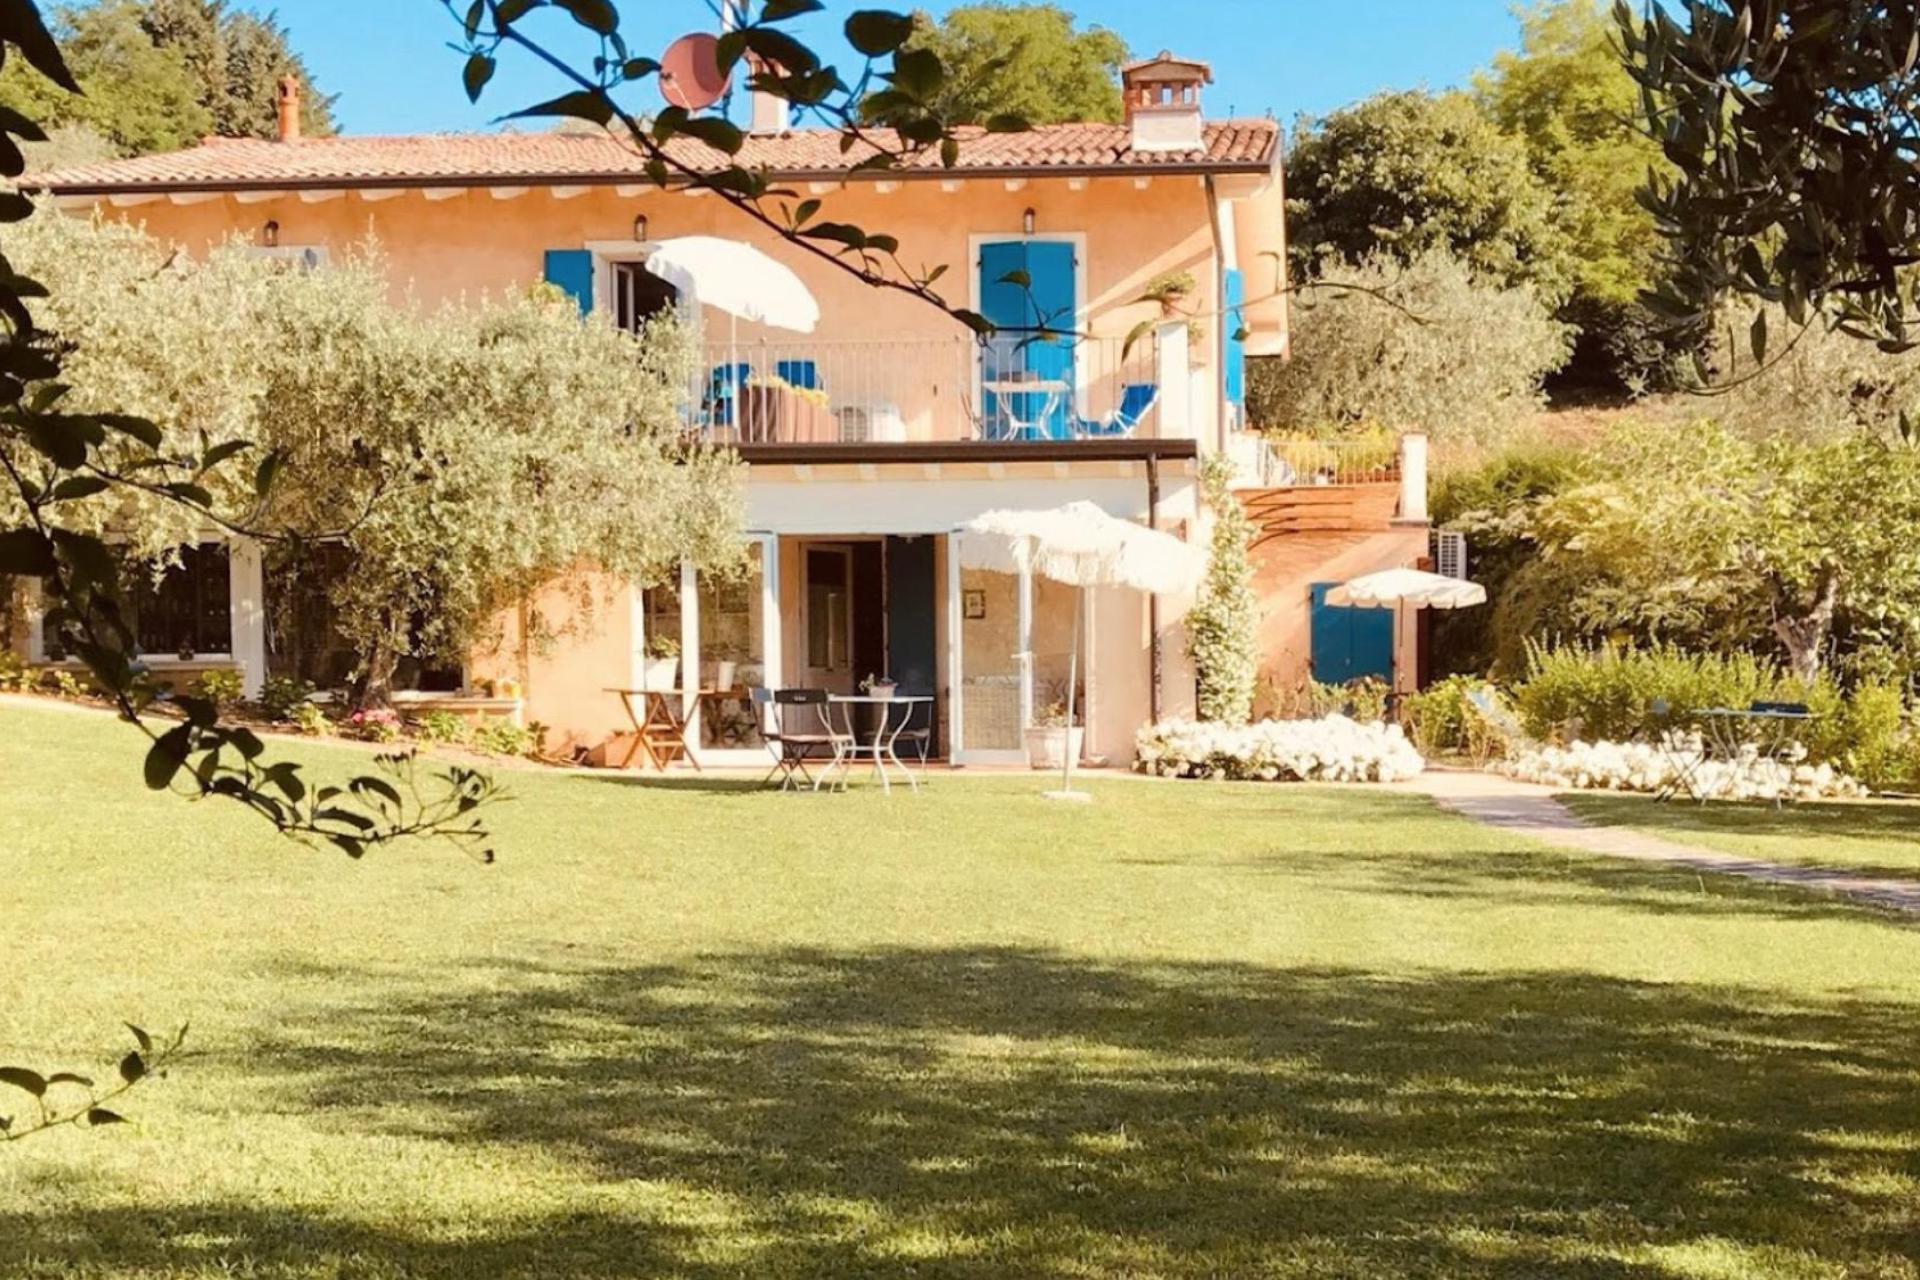 Small cozy agriturismo in an olive grove near Lake Garda